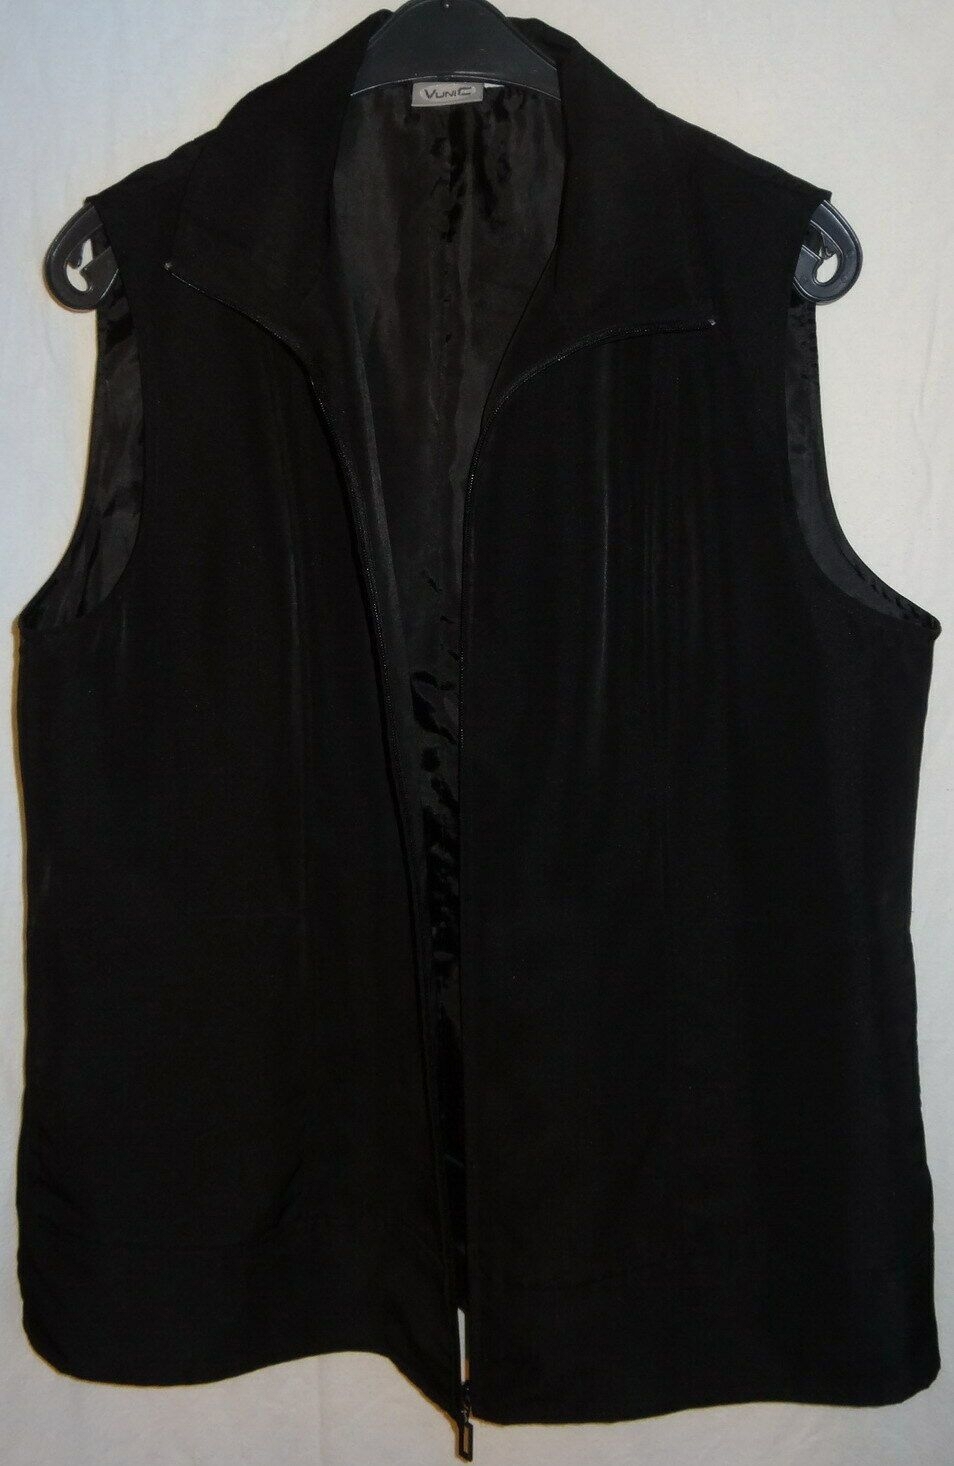 KL Vunic Jacke ärmellos Gr. 44 schwarz Reisverschluss Polyester wenig getragen einwandfrei erhalten 